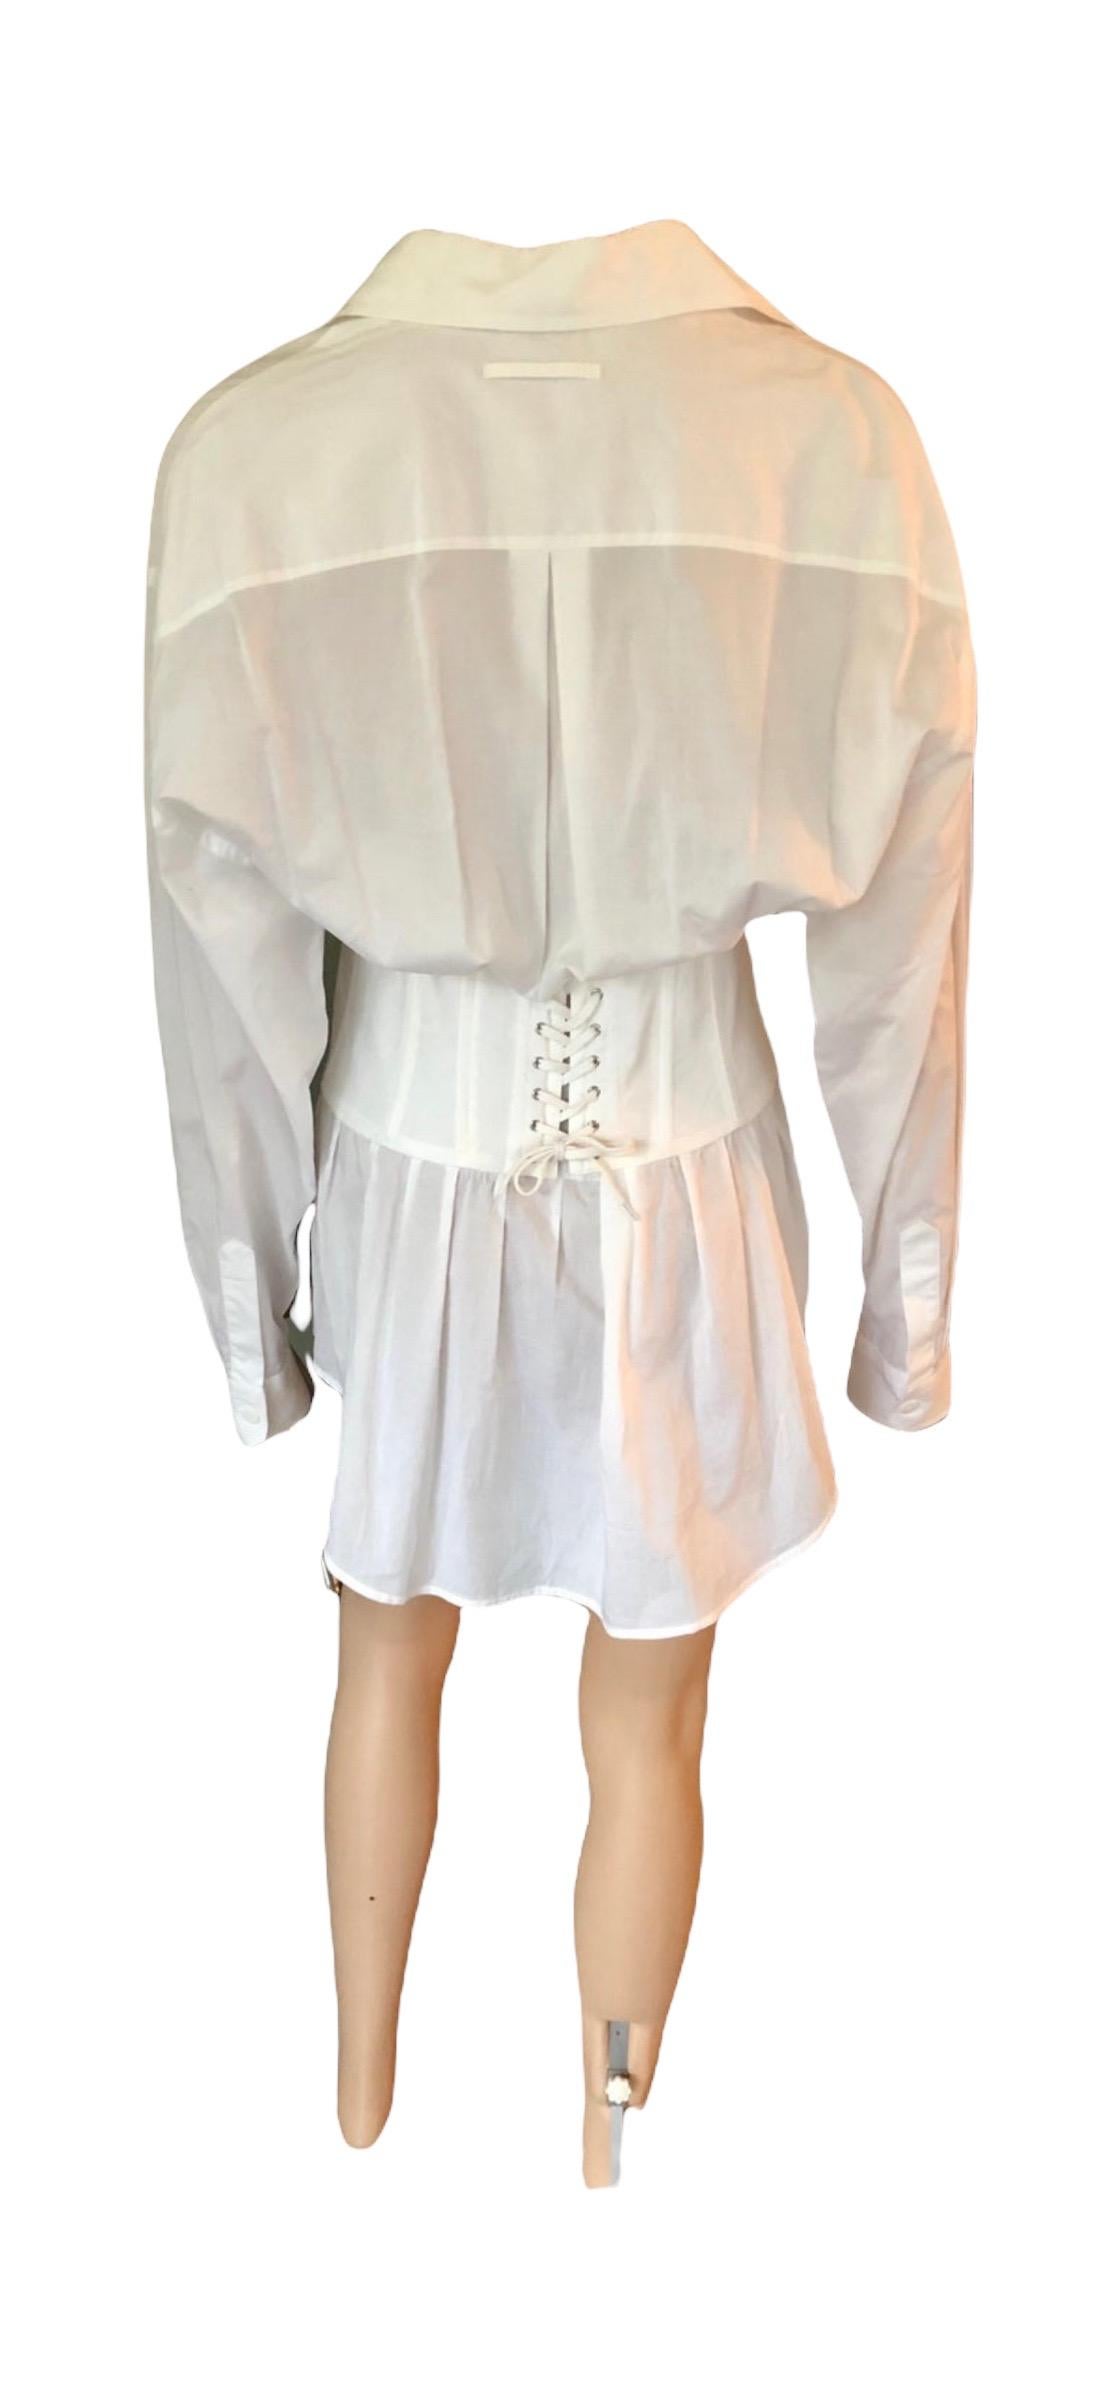 Gray Jean Paul Gaultier Vintage Corset White Shirt Dress For Sale